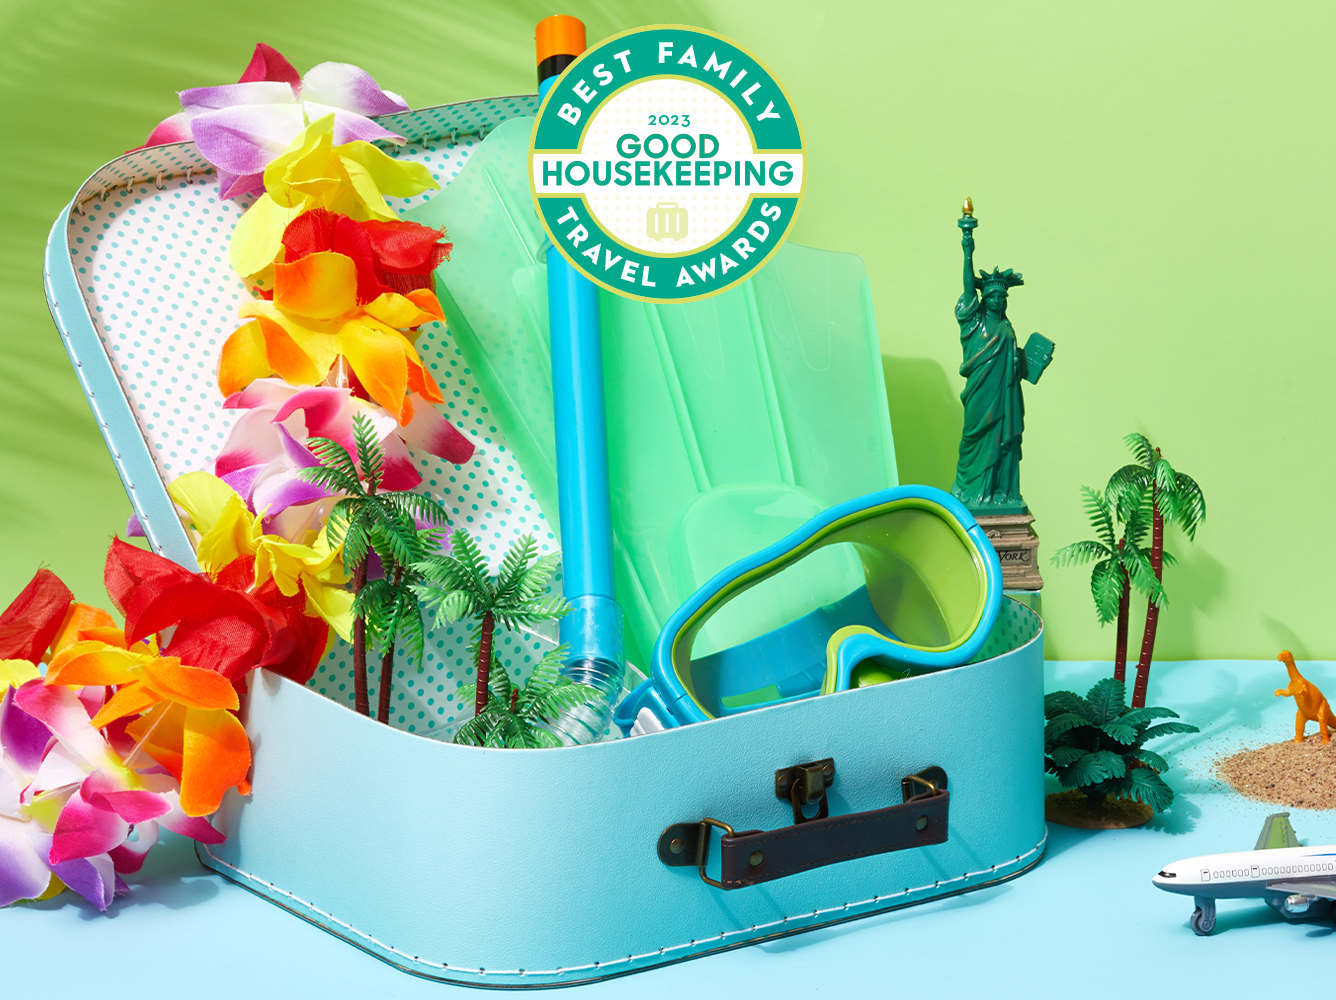 Good Housekeeping's 2023 Family Travel Awards